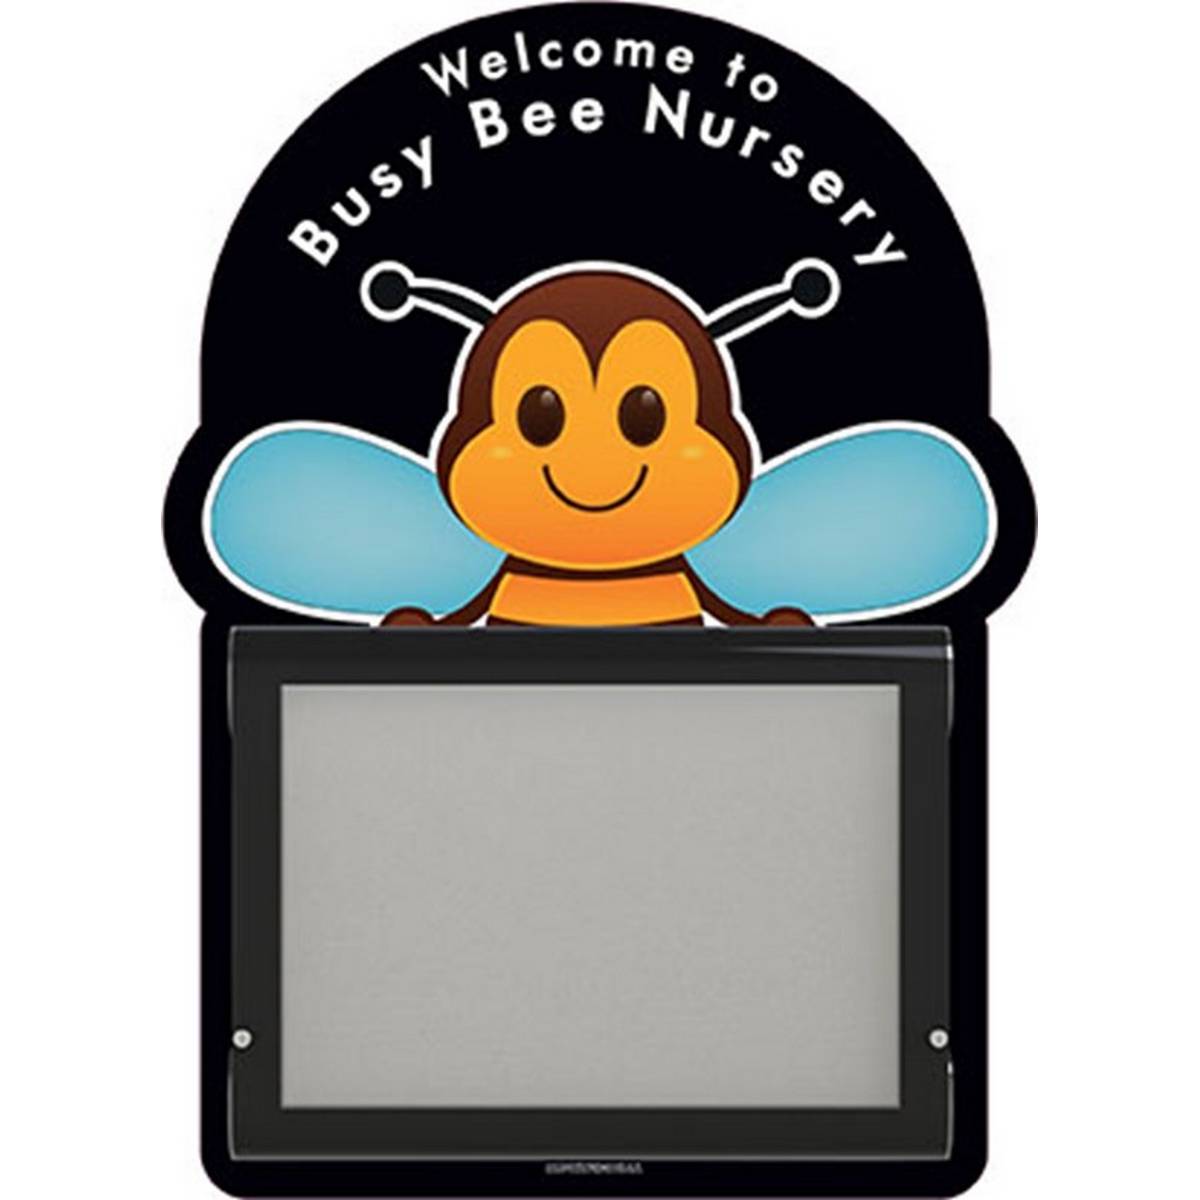 Weathershield Nursery/Primary Welcome Bee Sign